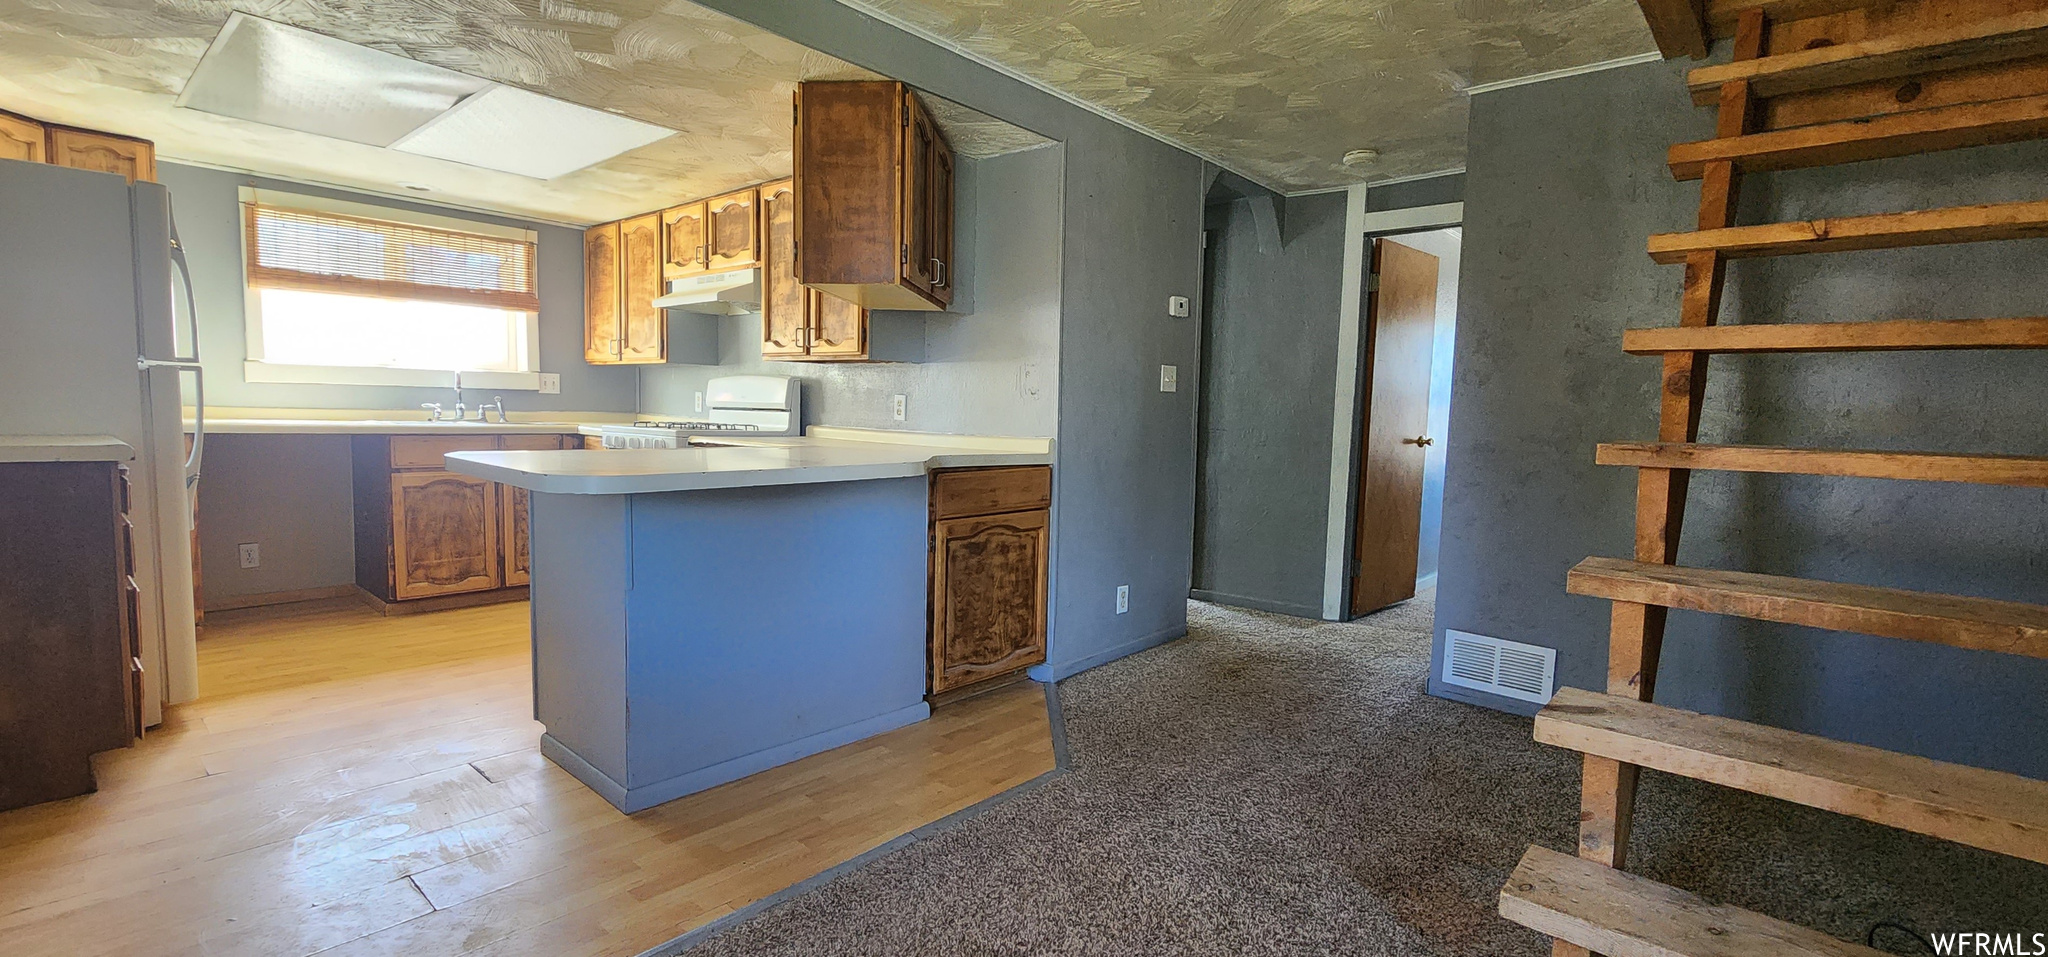 Kitchen with light countertops, light hardwood flooring, a skylight, and range